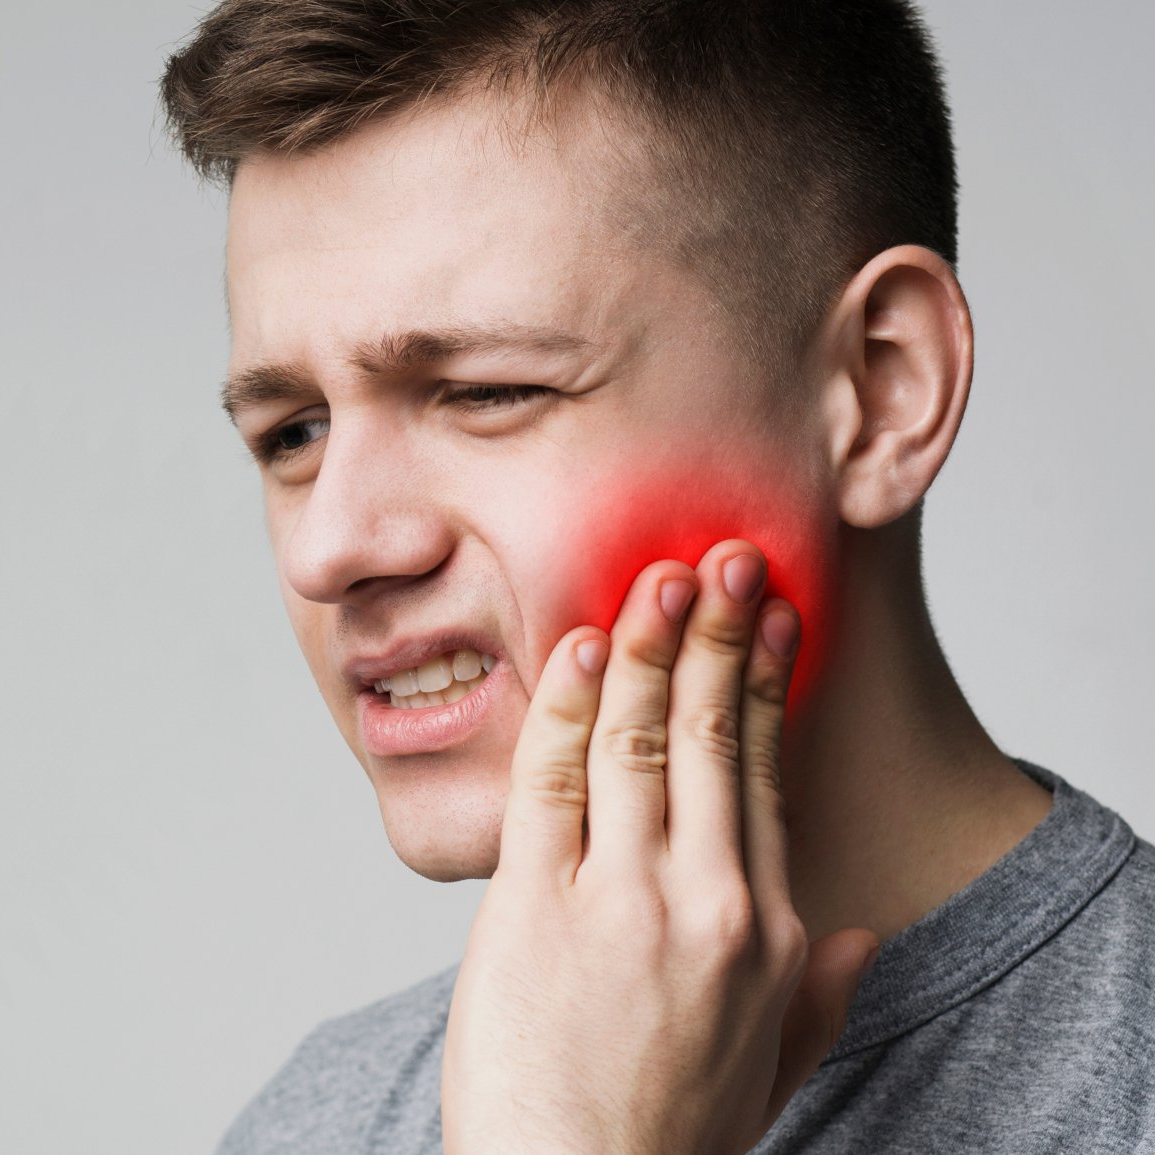 Jaw Pain Treatment With Splints